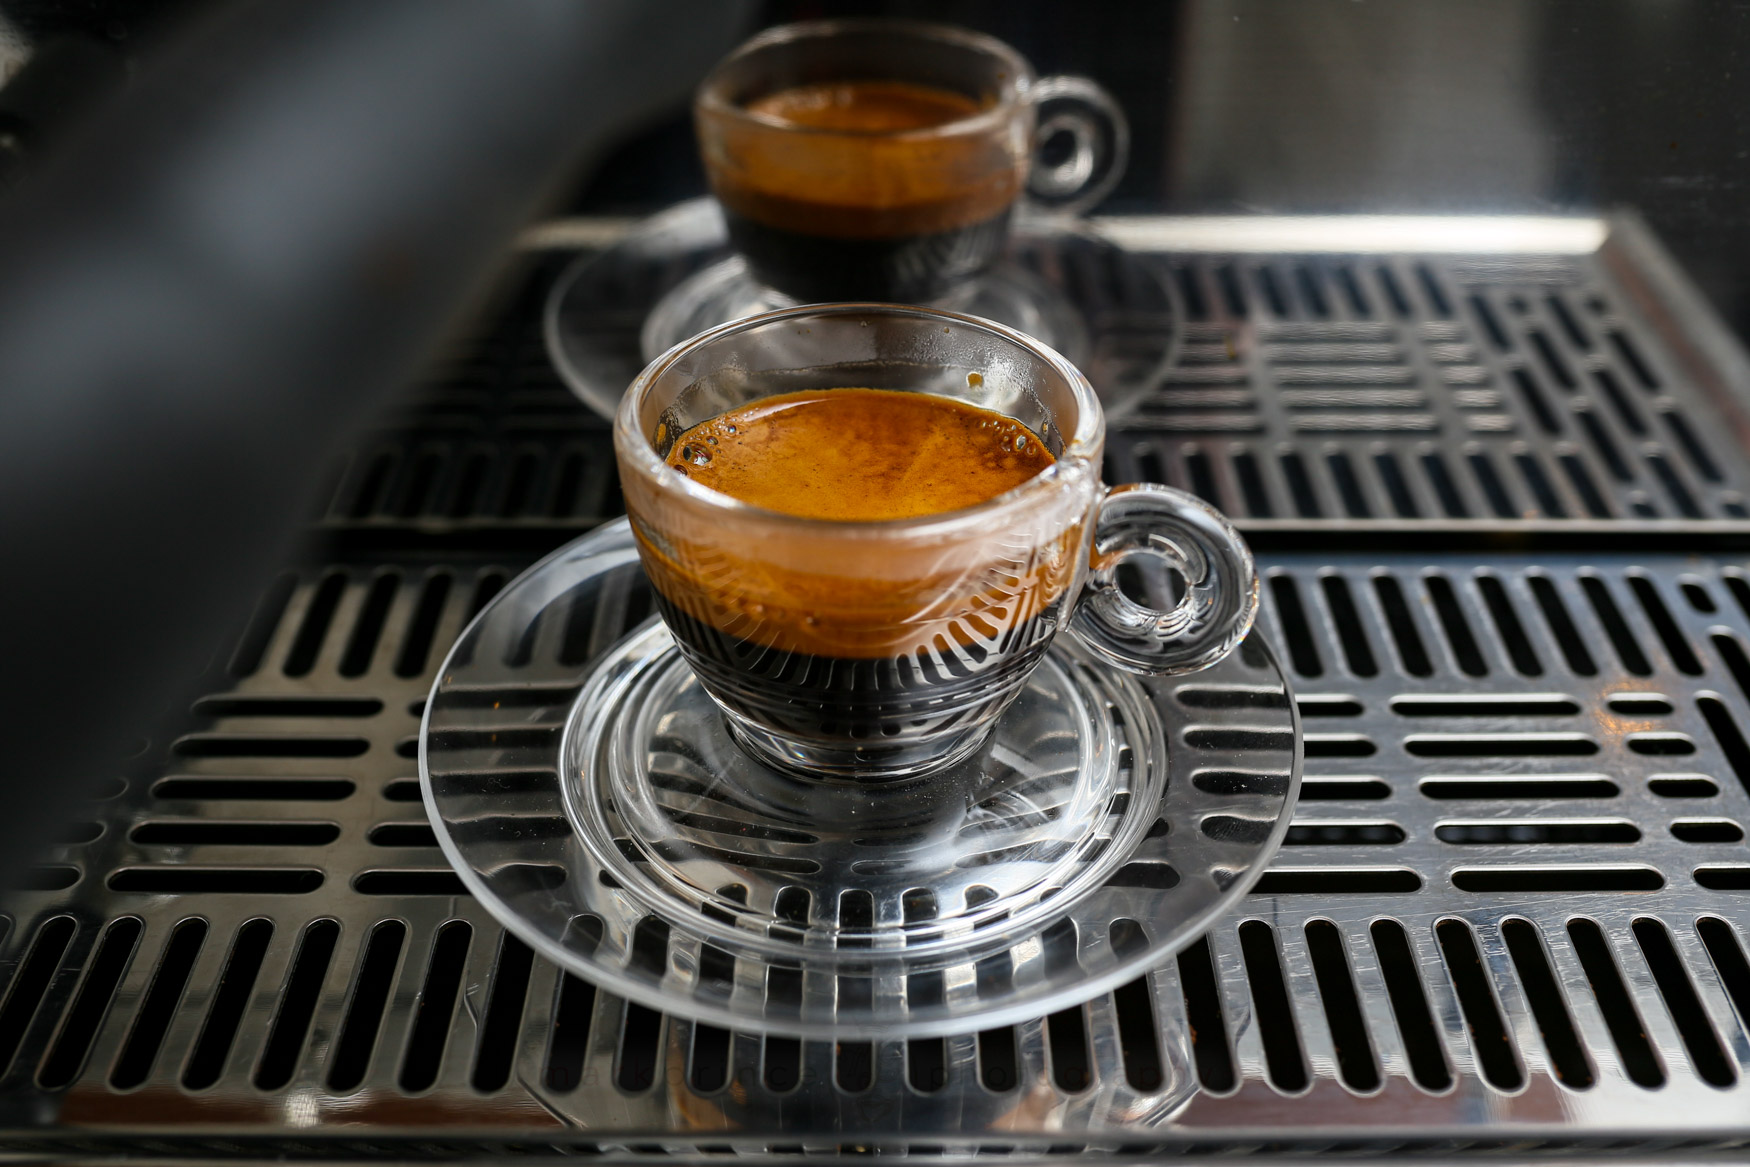 https://www.coffeegeek.com/wp-content/uploads/2021/06/espressoshot-1.jpg